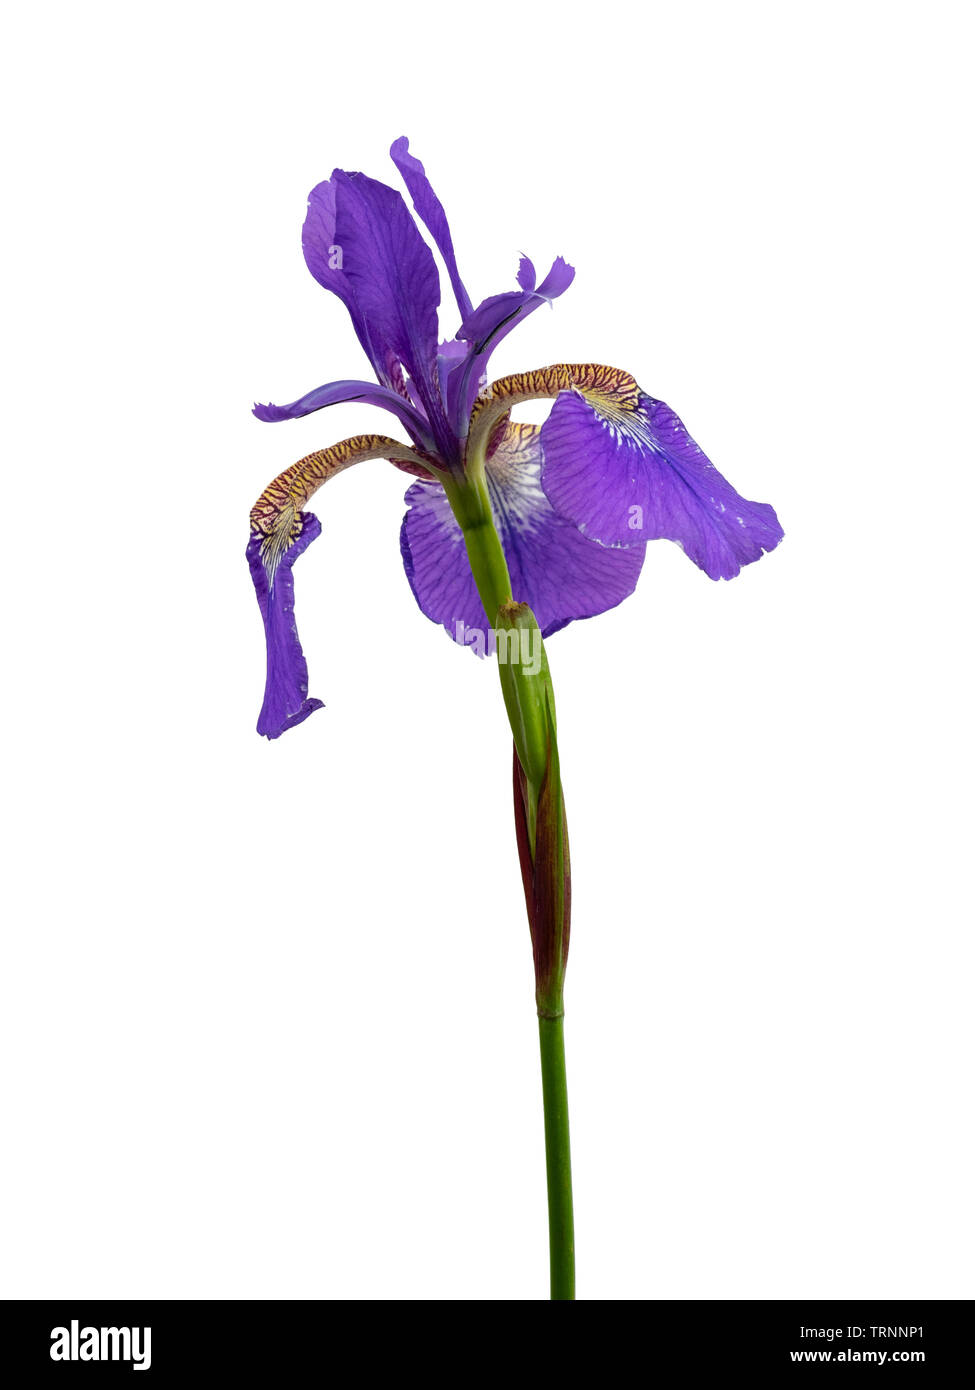 Single flower of the perennial Siberian iris, Iris sibirica, against a white background Stock Photo